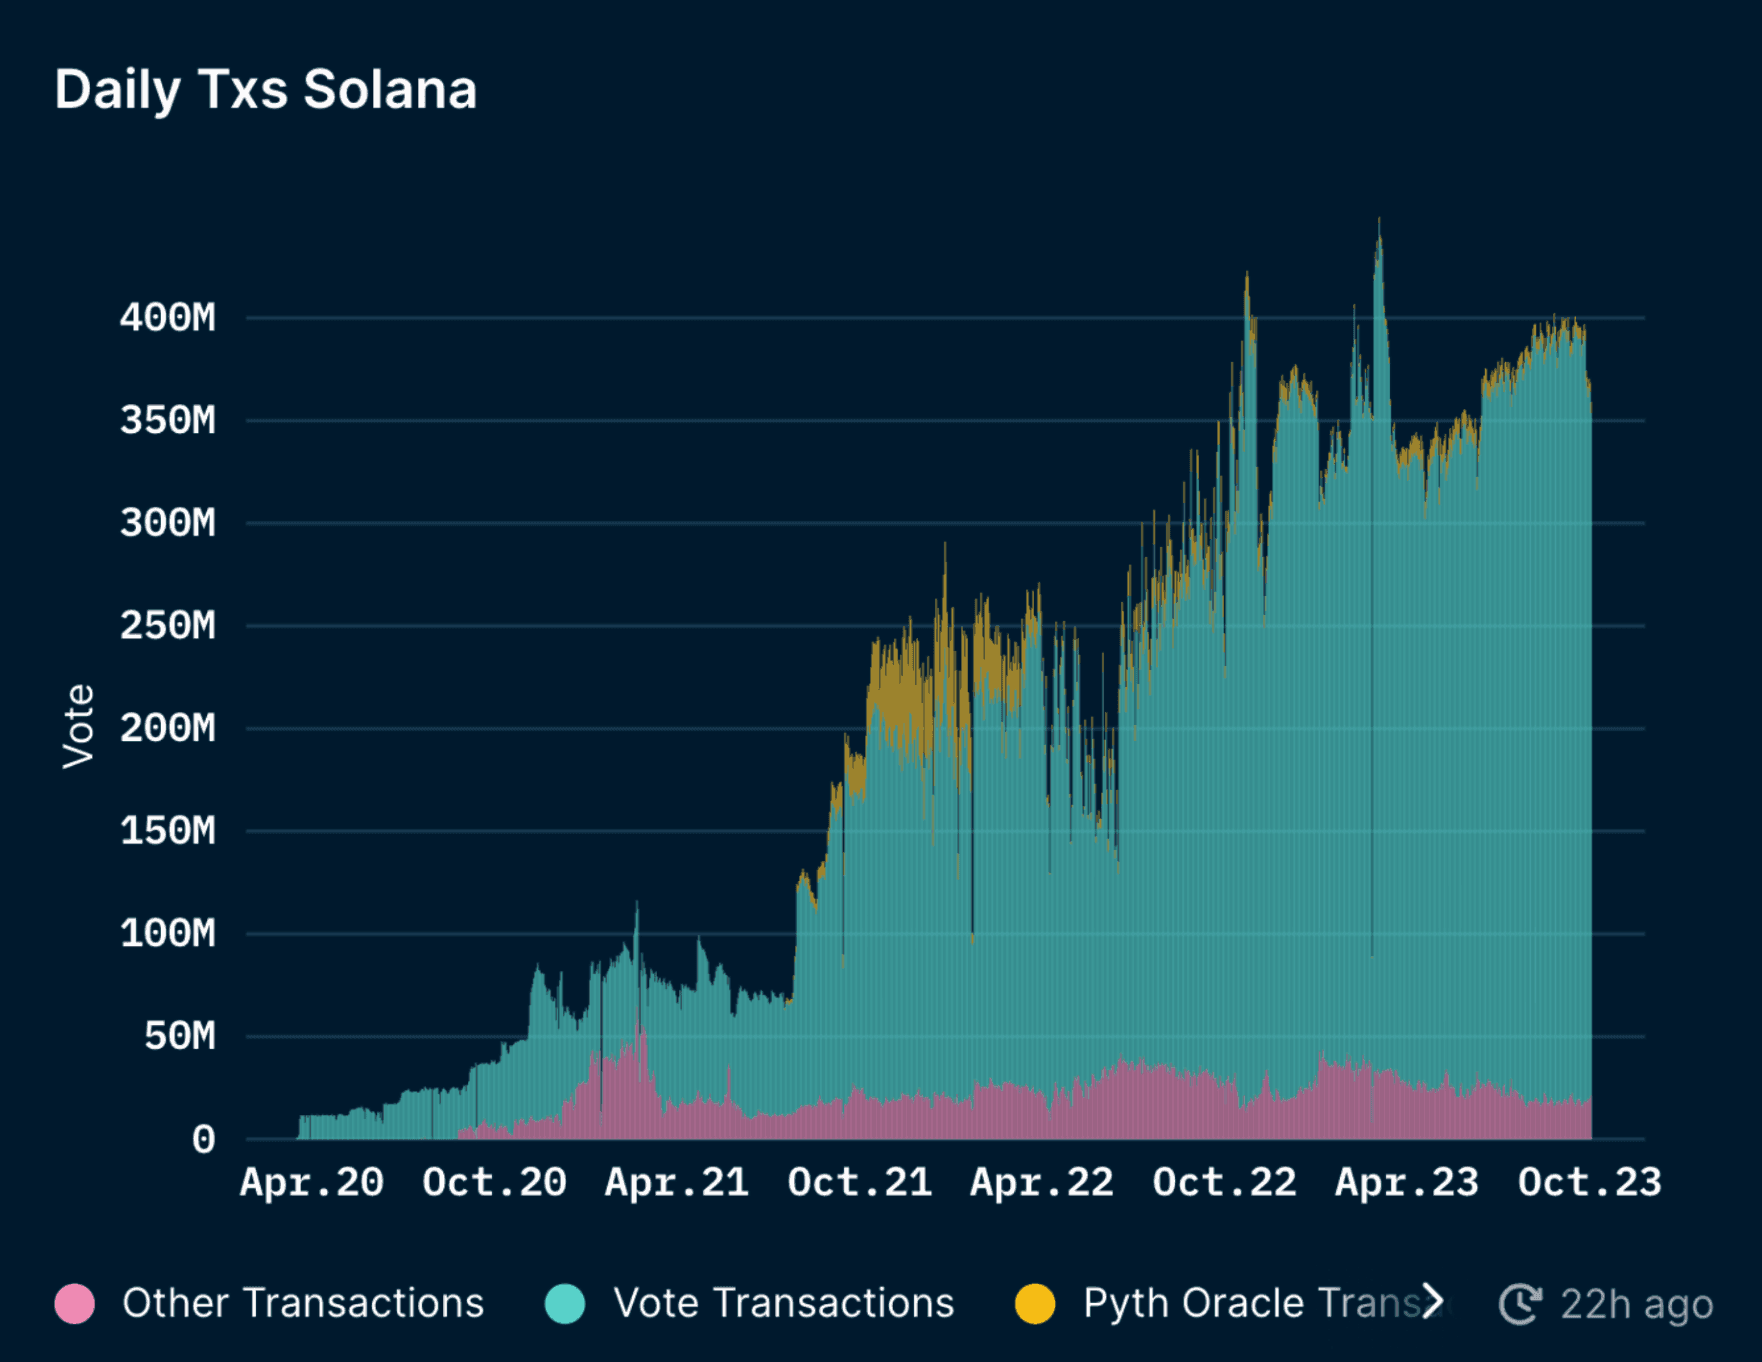 Daily transactions on Solana